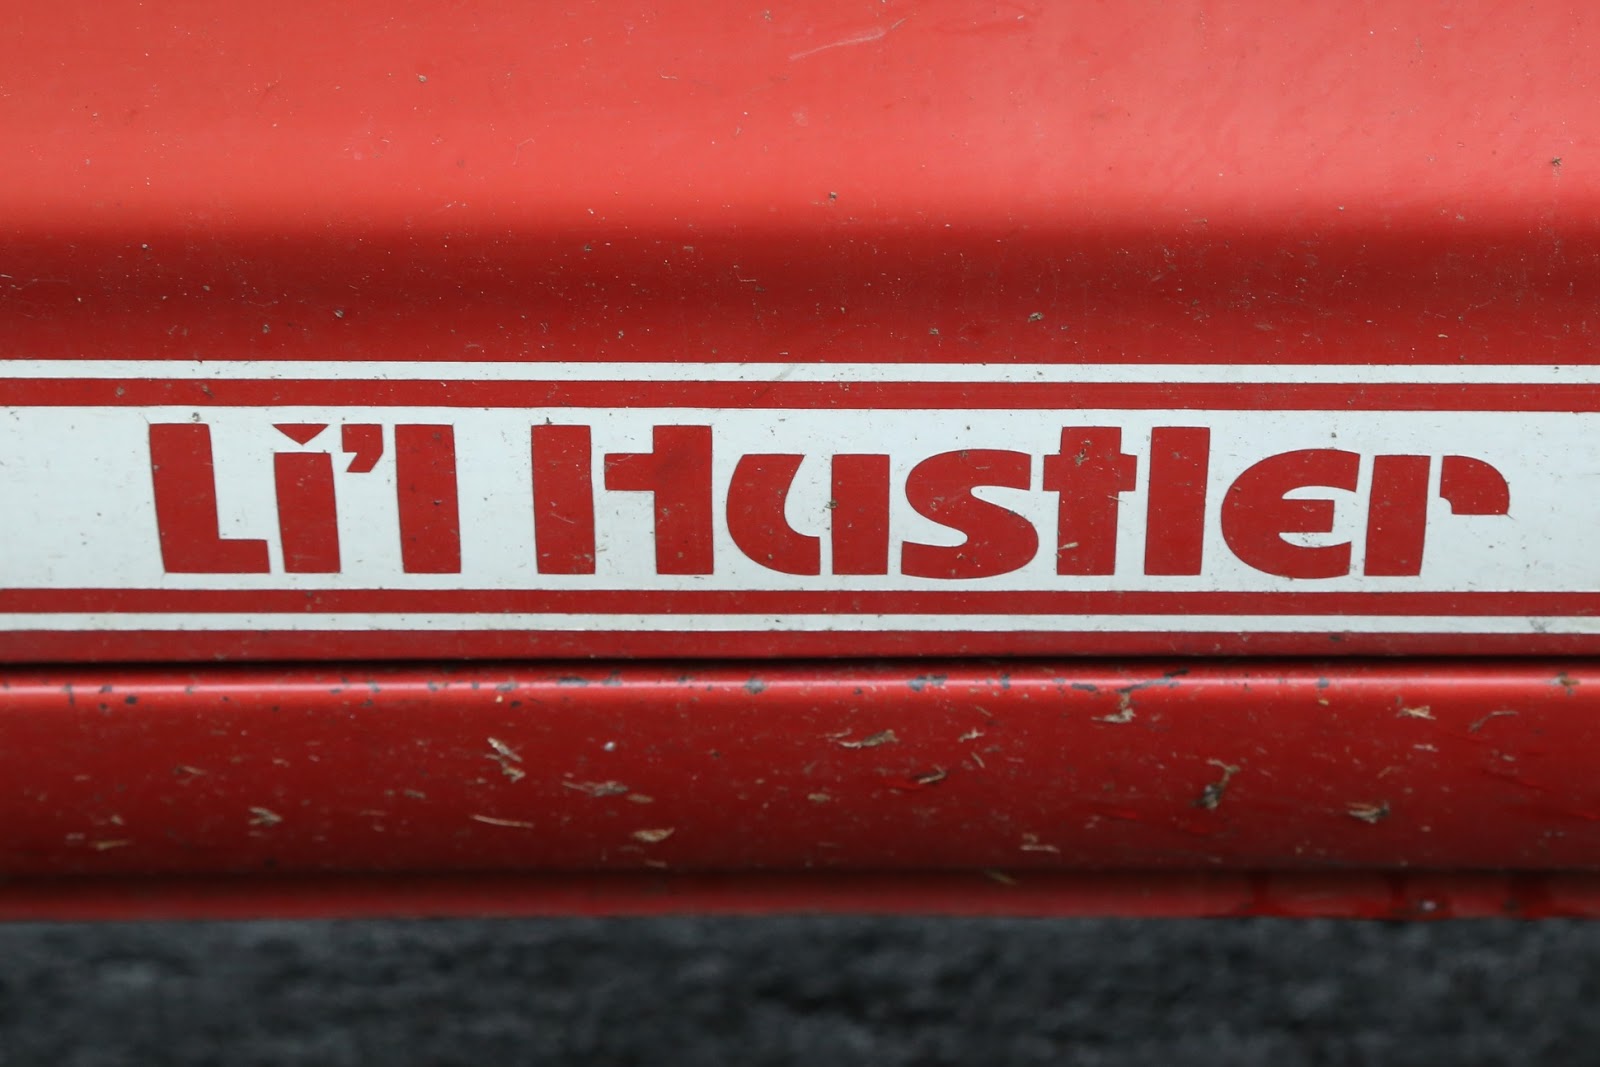  Datsun Lil Hustler logo graphic